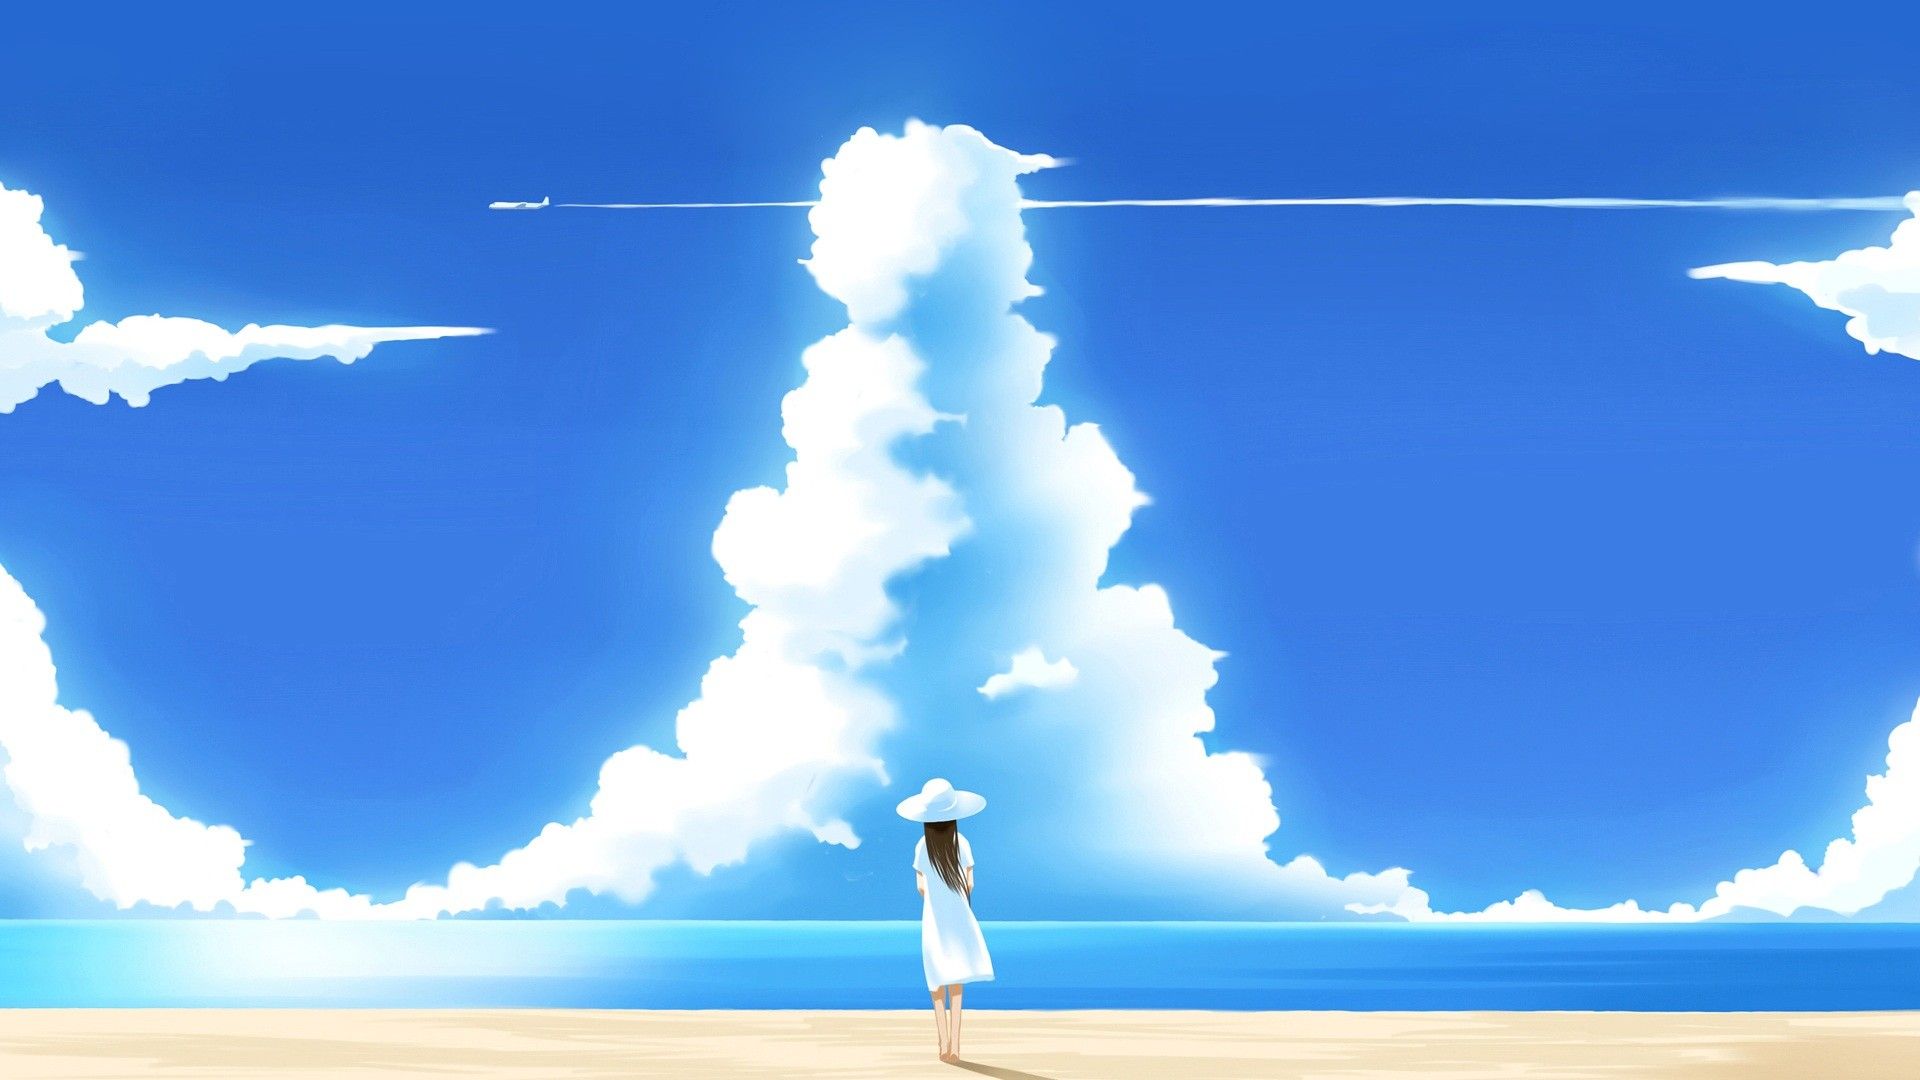 #blue, #anime girls, #water, #clouds, #drawing, #beach, #fantasy art, #sea, wallpaper. Mocah.org HD Wallpaper